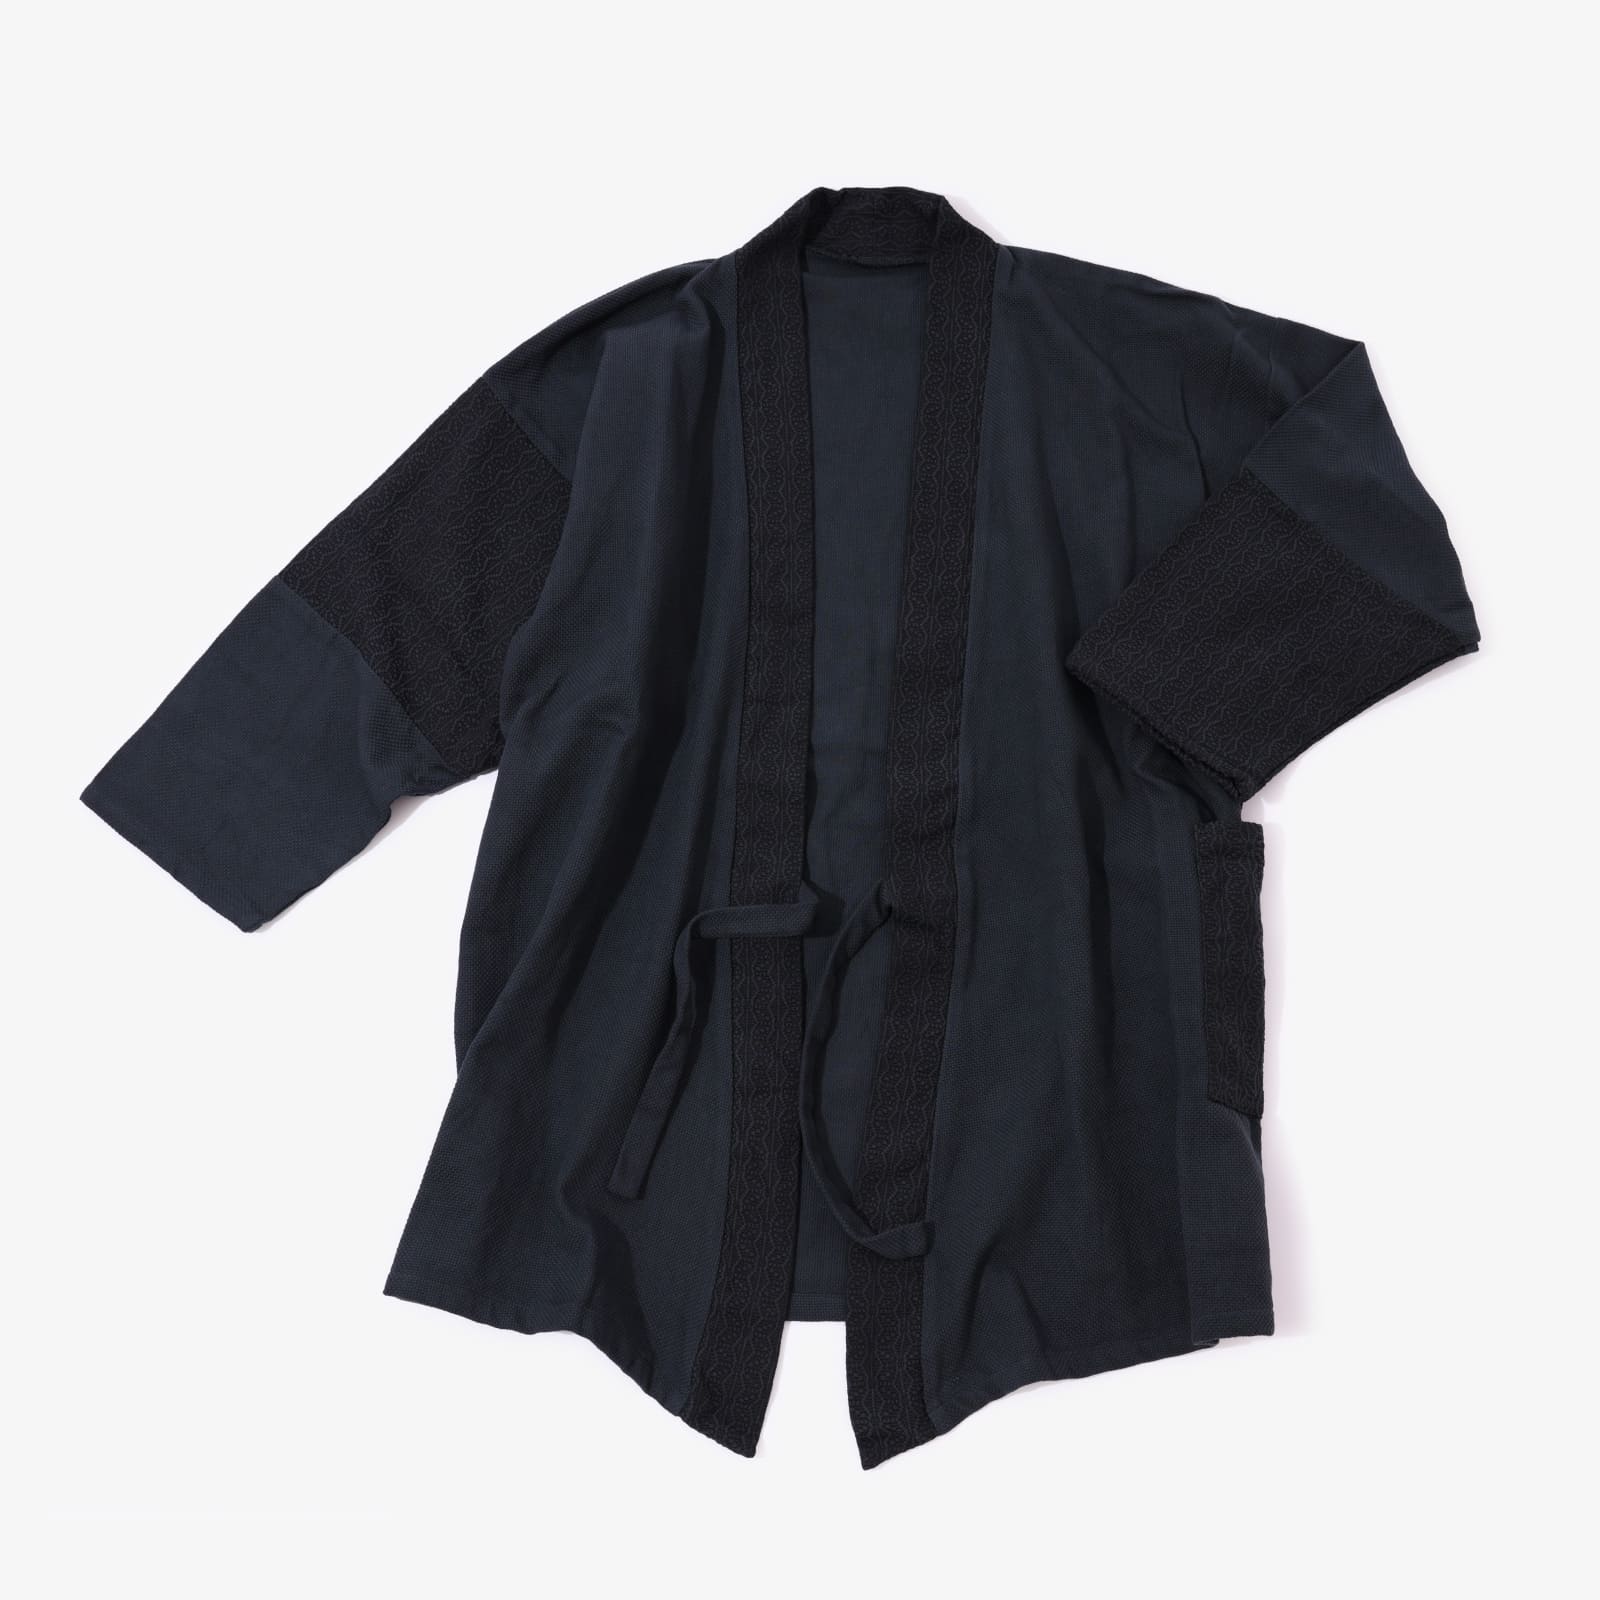 Kimono Jacket in Japanese Sashiko Embroidery - Long Sleeve